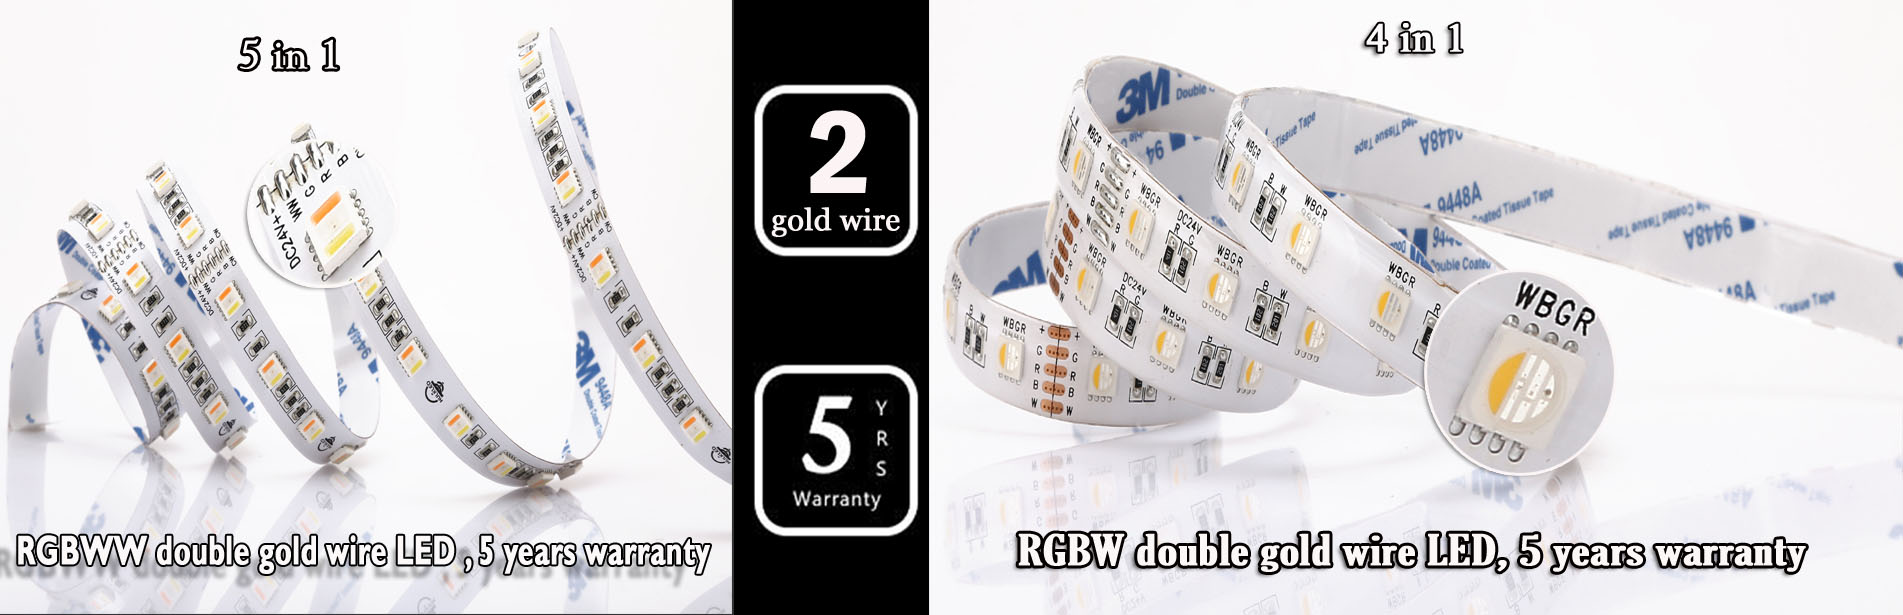 RGBWW LED strip RGBWW 5 in1 LED LED strip